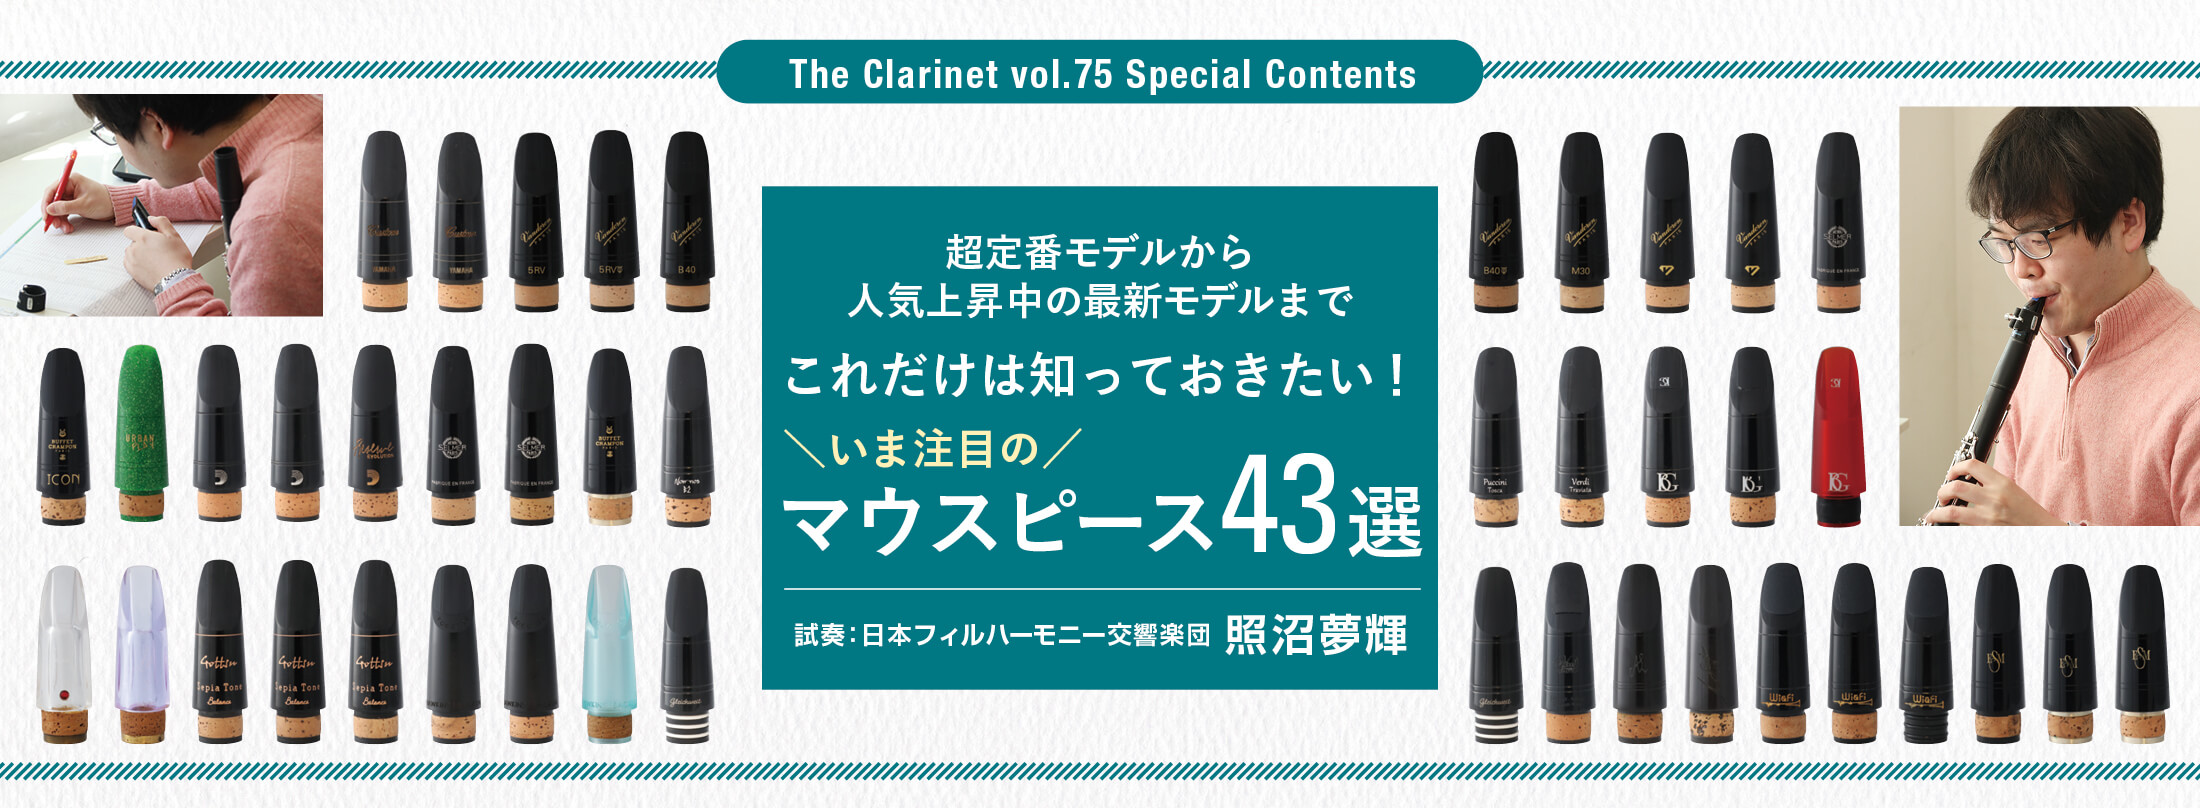 The Clarinet 75号